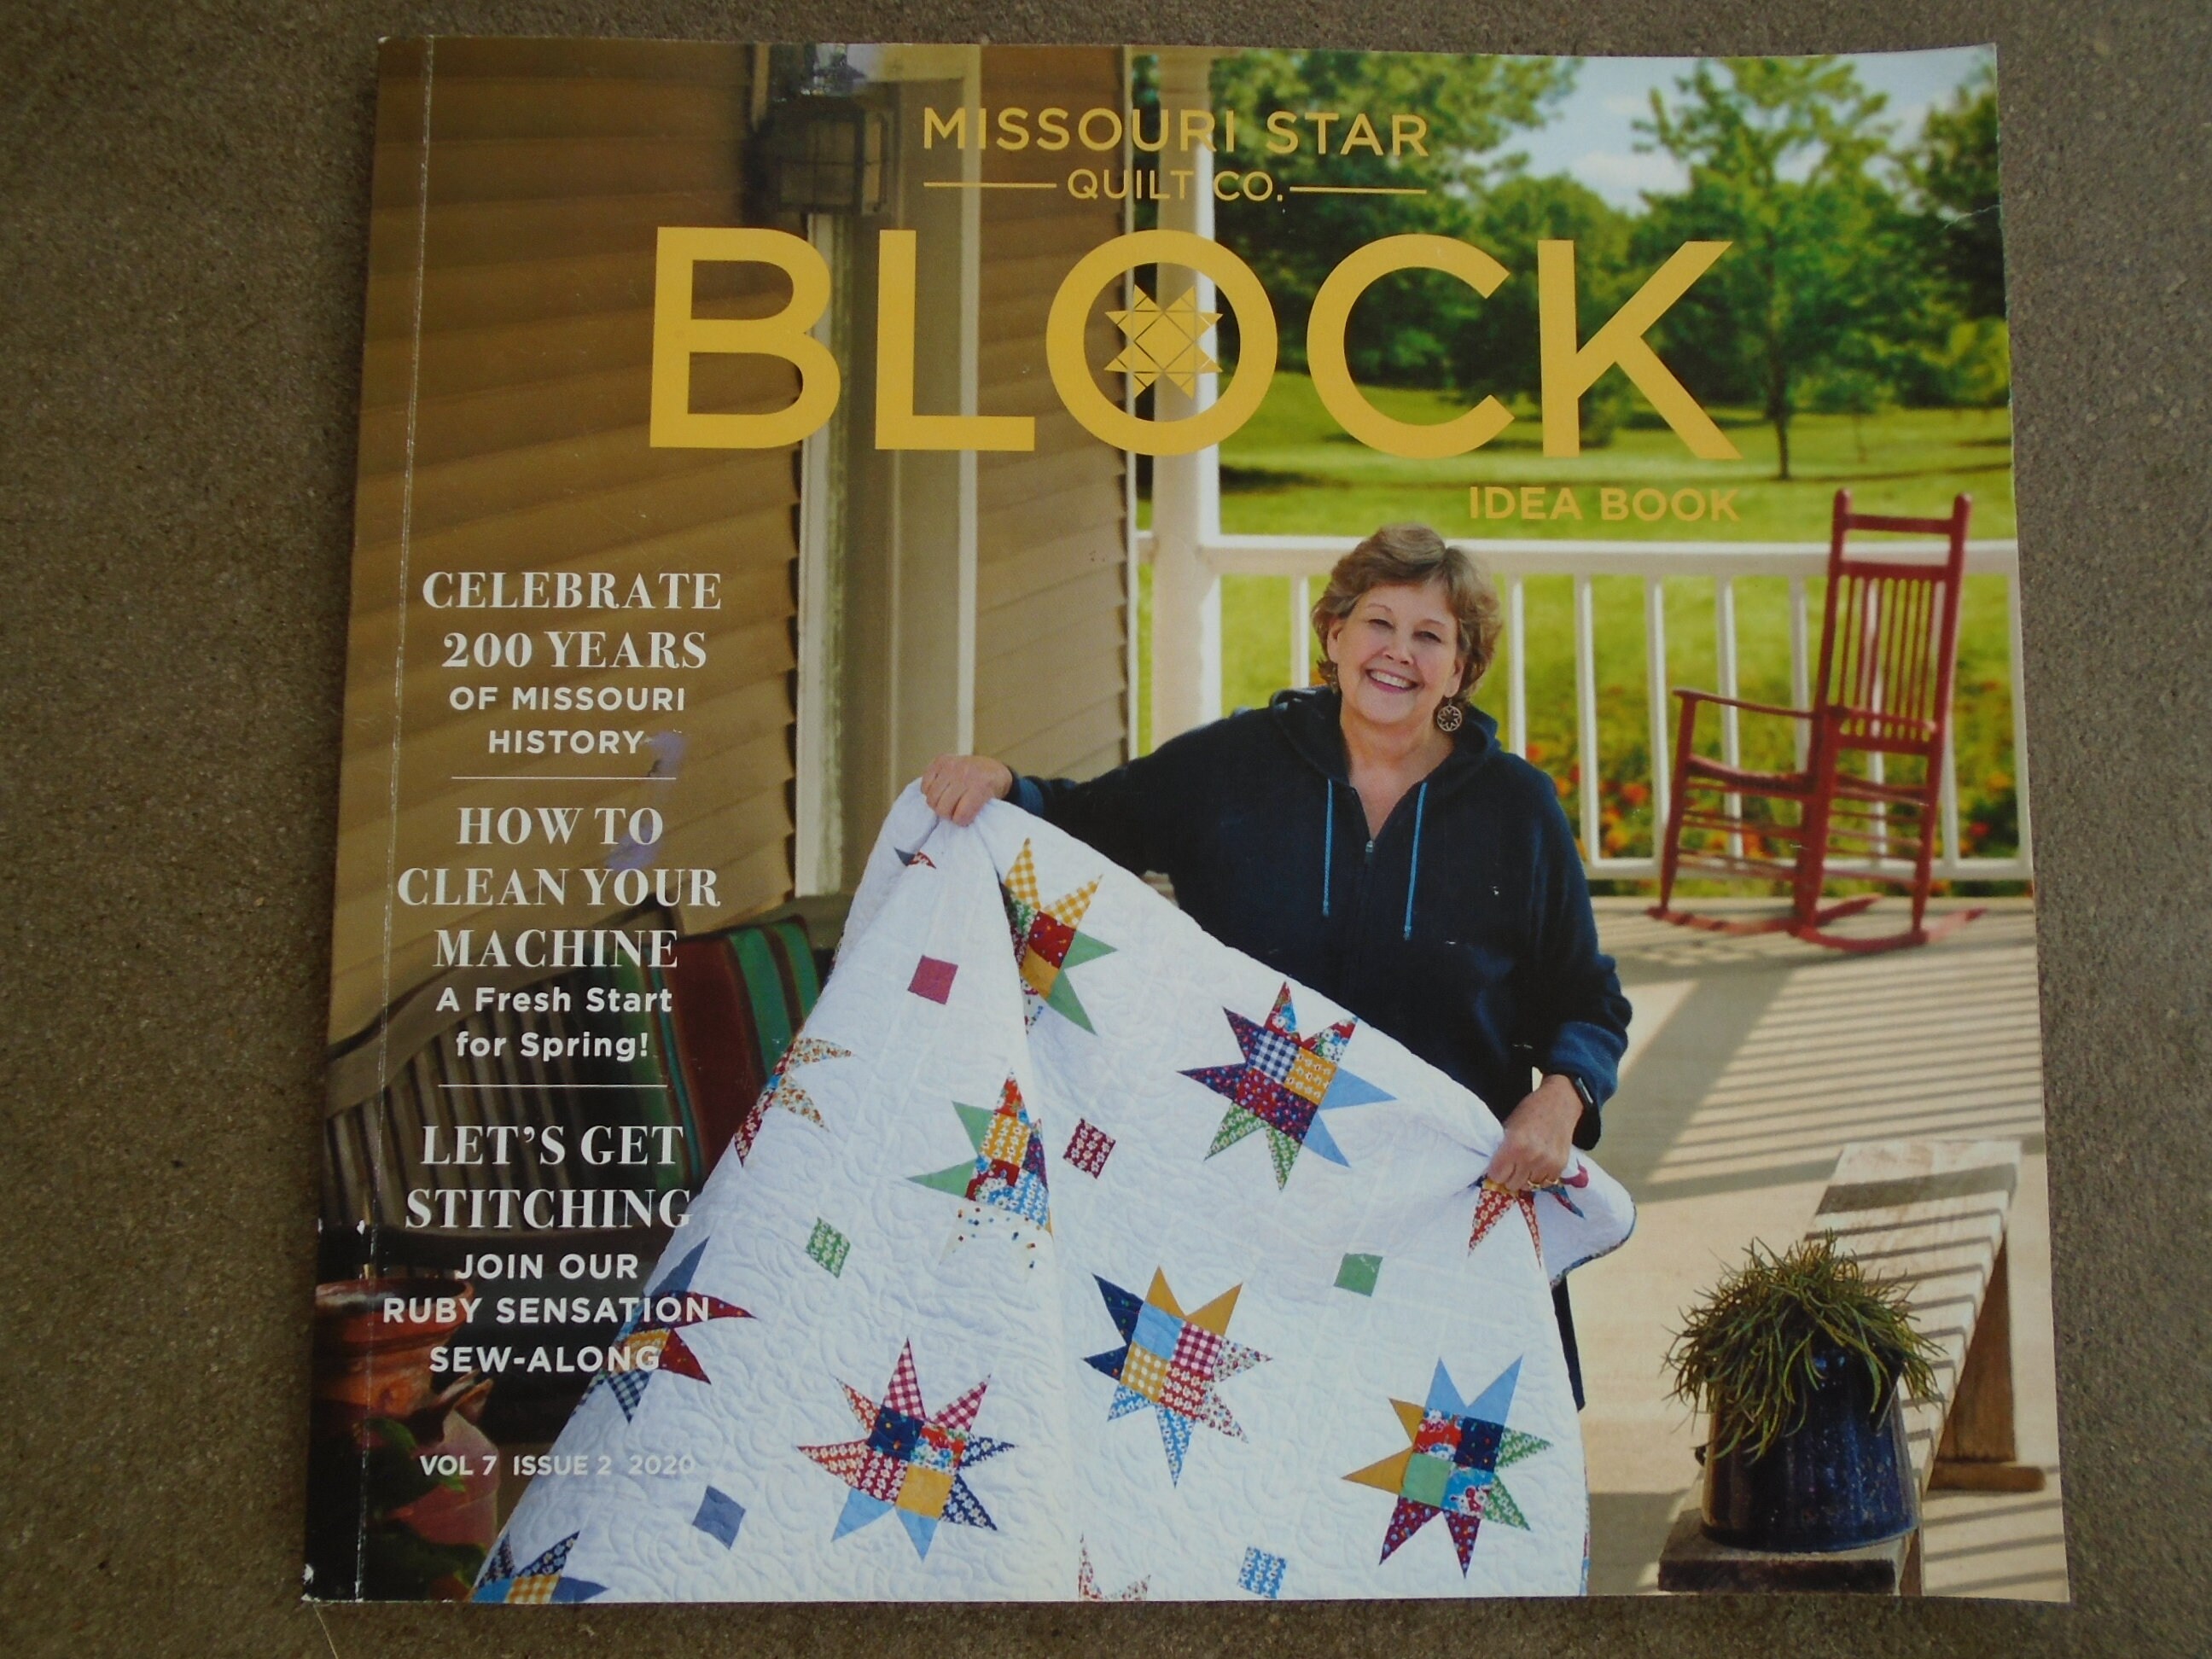 Missouri Star Quilt Co Block Idea Book Vol 7 Issue 3 2020 